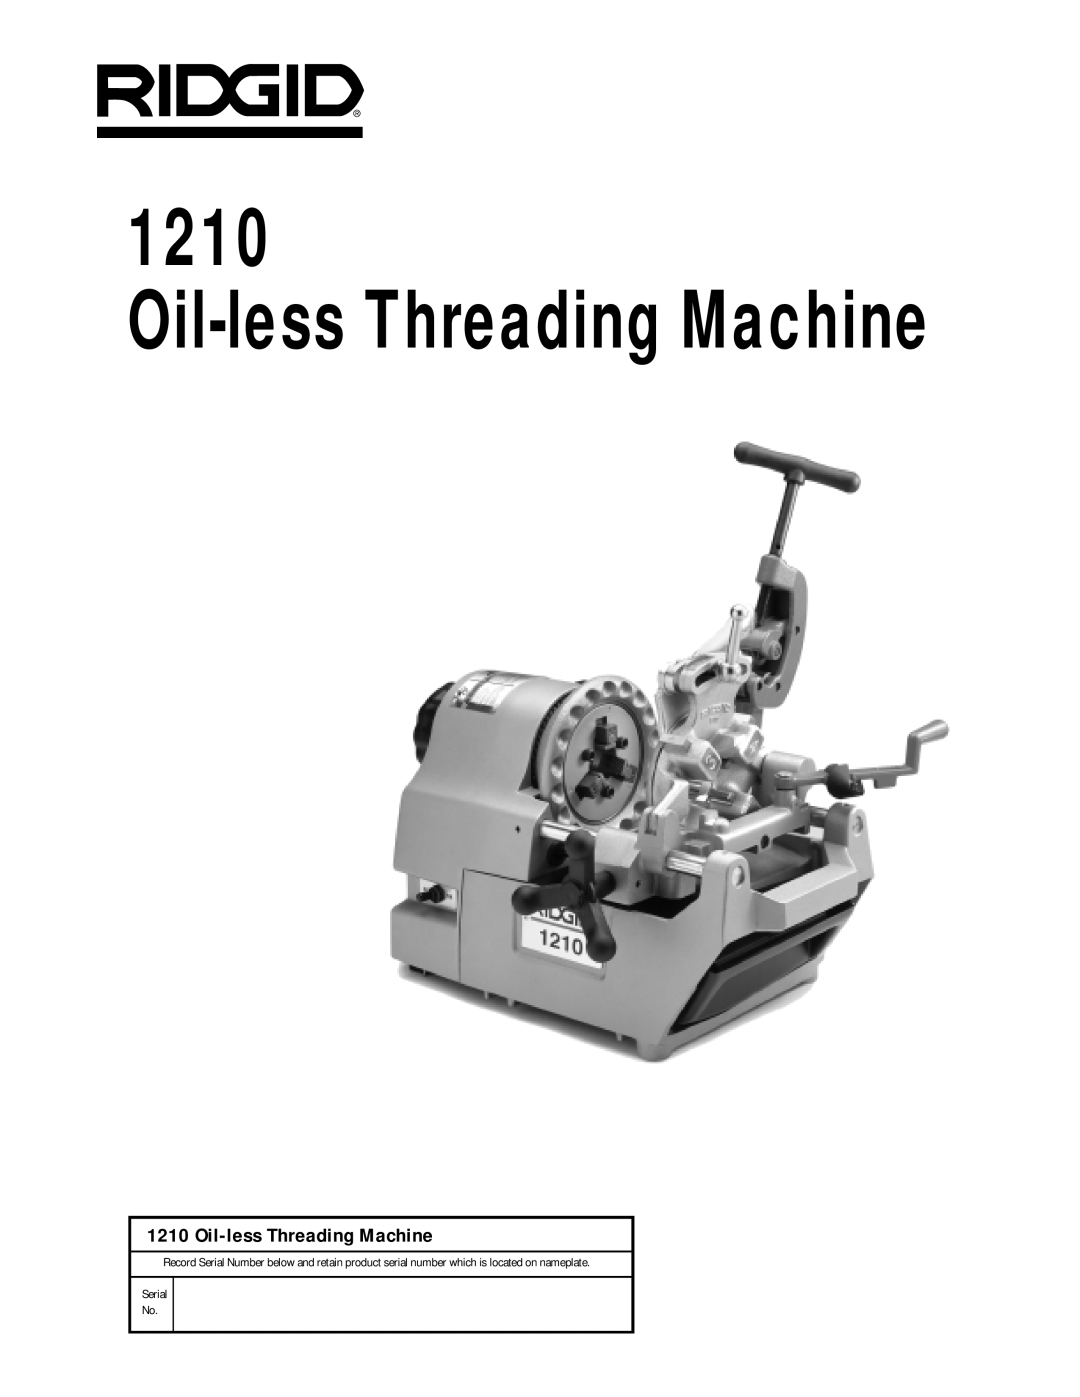 RIDGID 1210 manual Oil-less Threading Machine, Serial No 